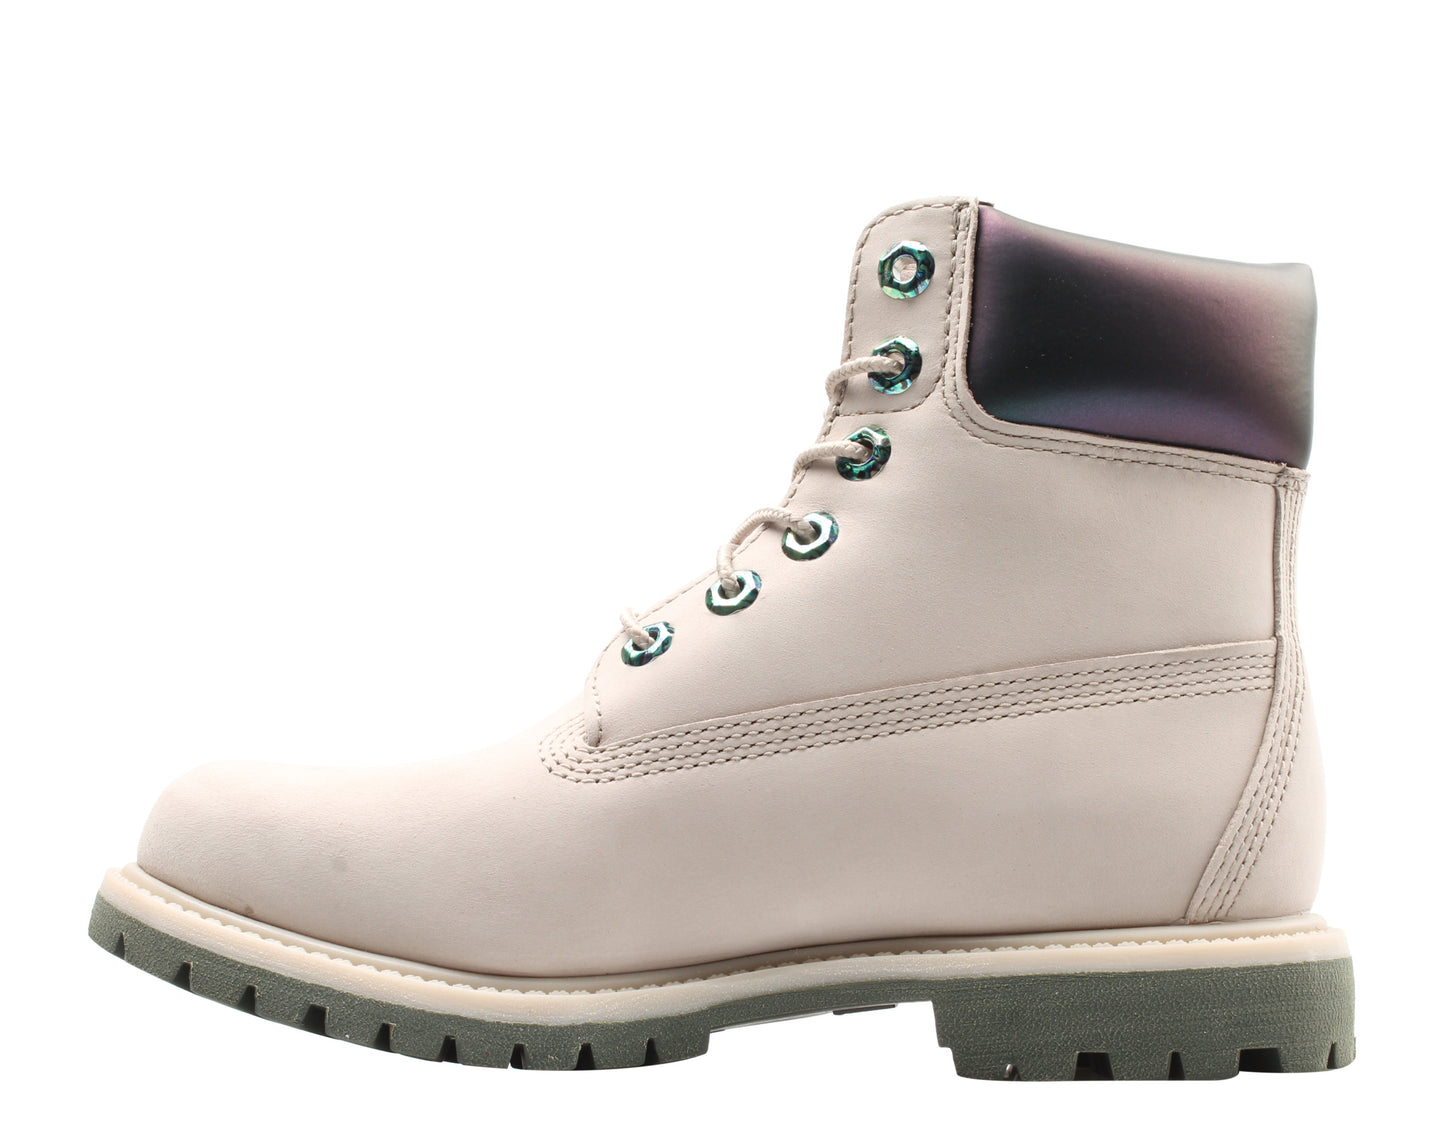 Timberland 6-Inch Premium Waterproof Taupe/Iridescent Women's Boots A22YU